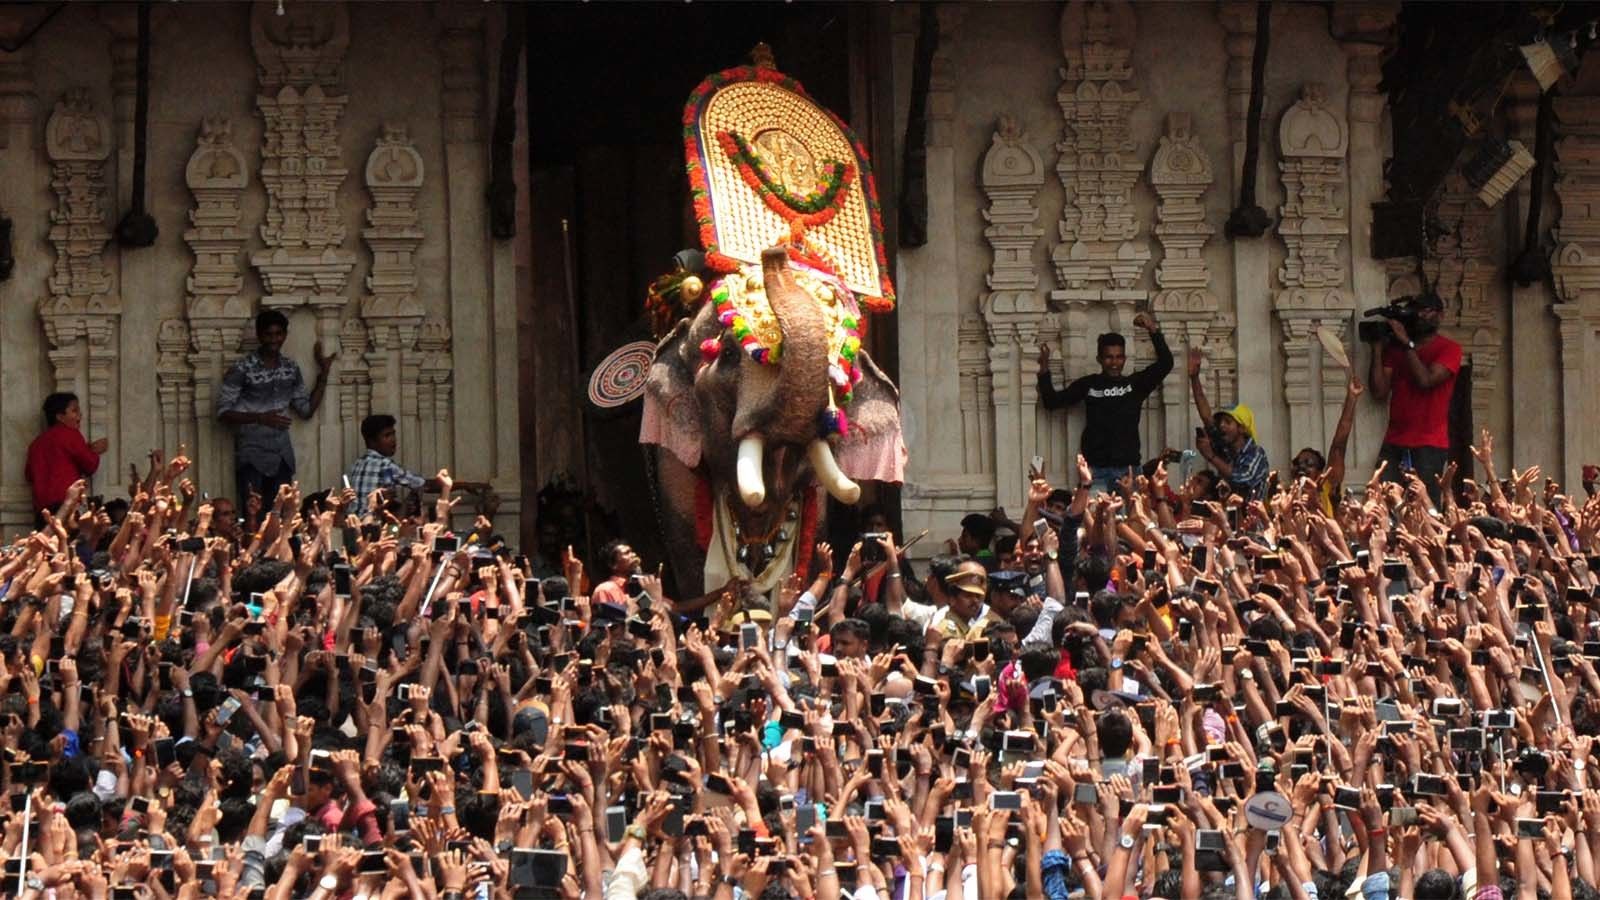 Kerala's star elephants are a 'jumbo' hit on the internet